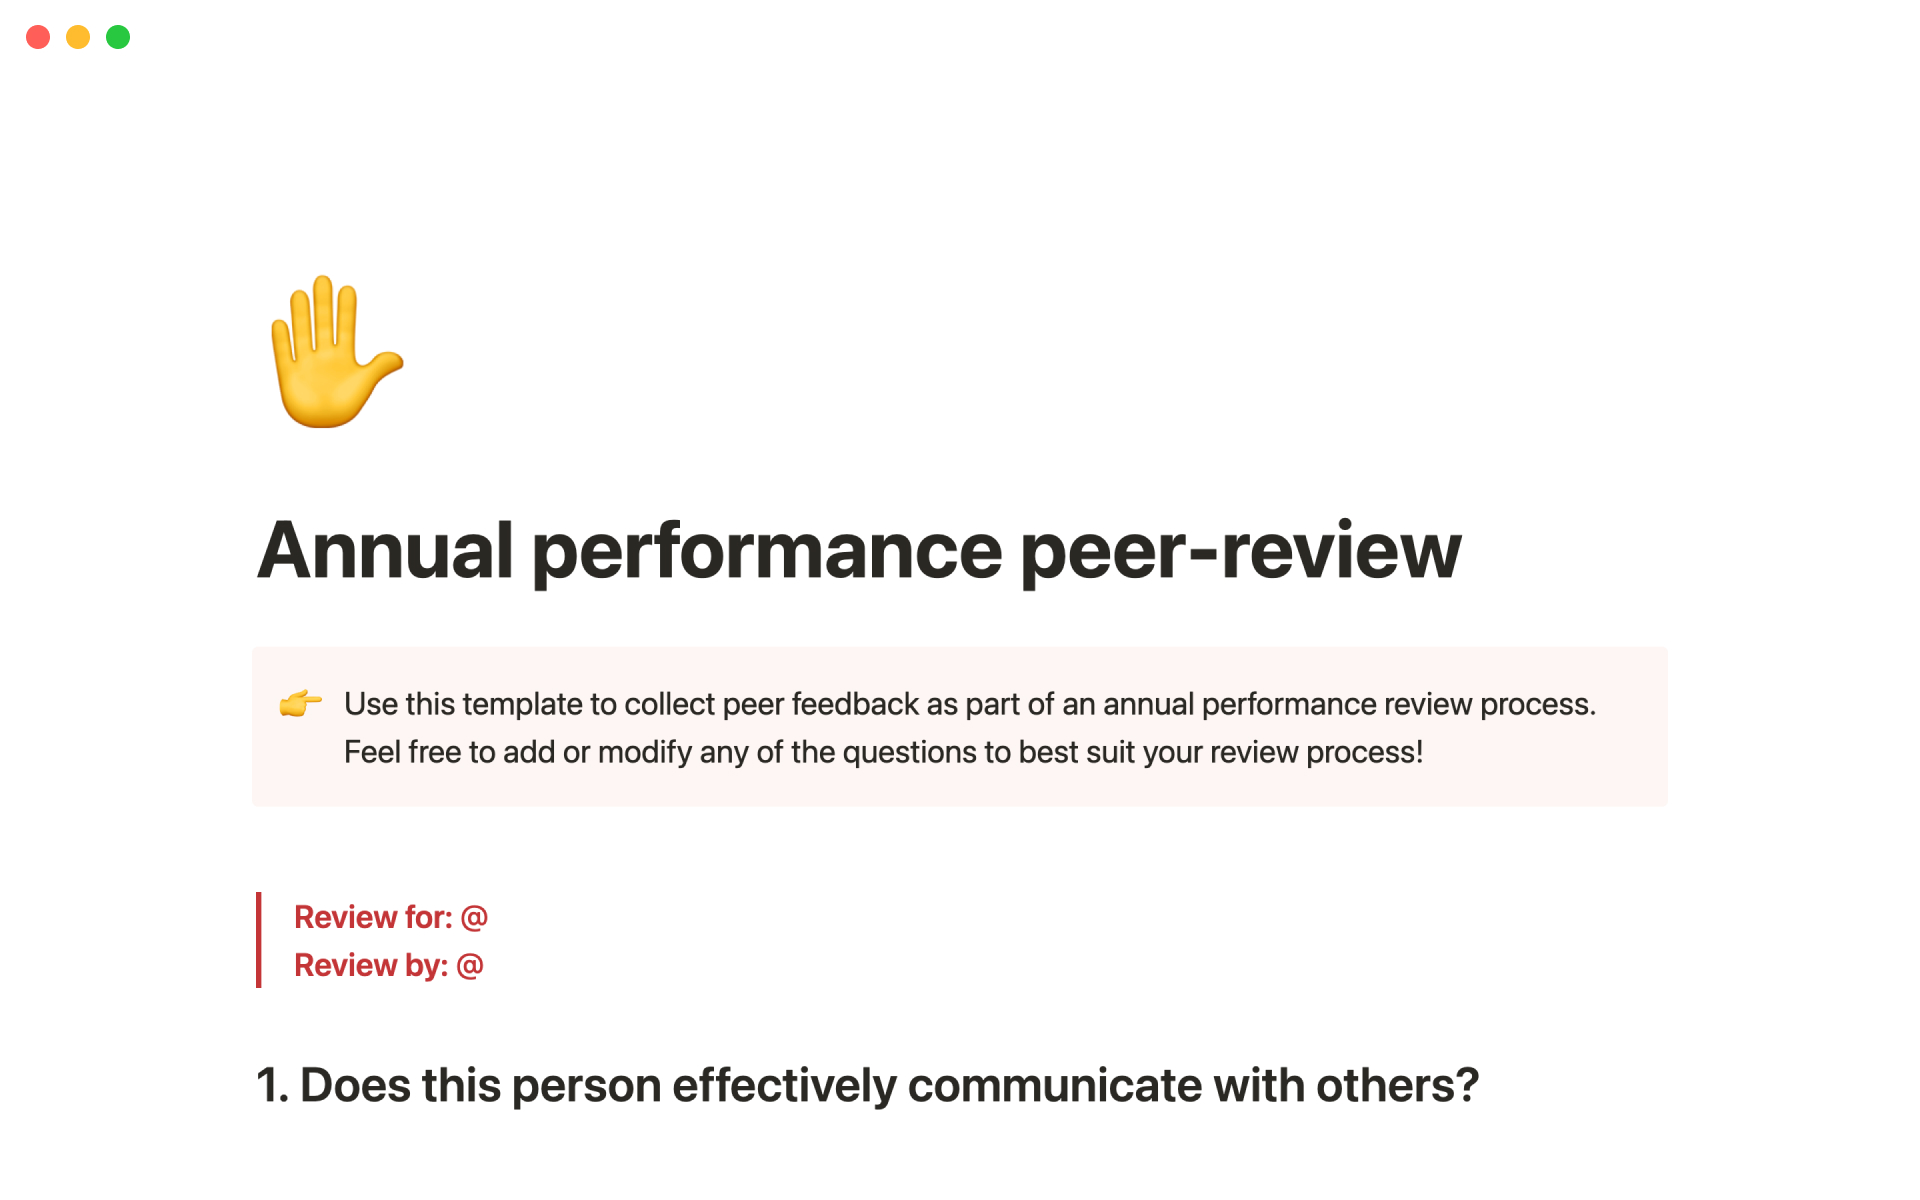 Annual-performance-peer-review-template-desktop-image